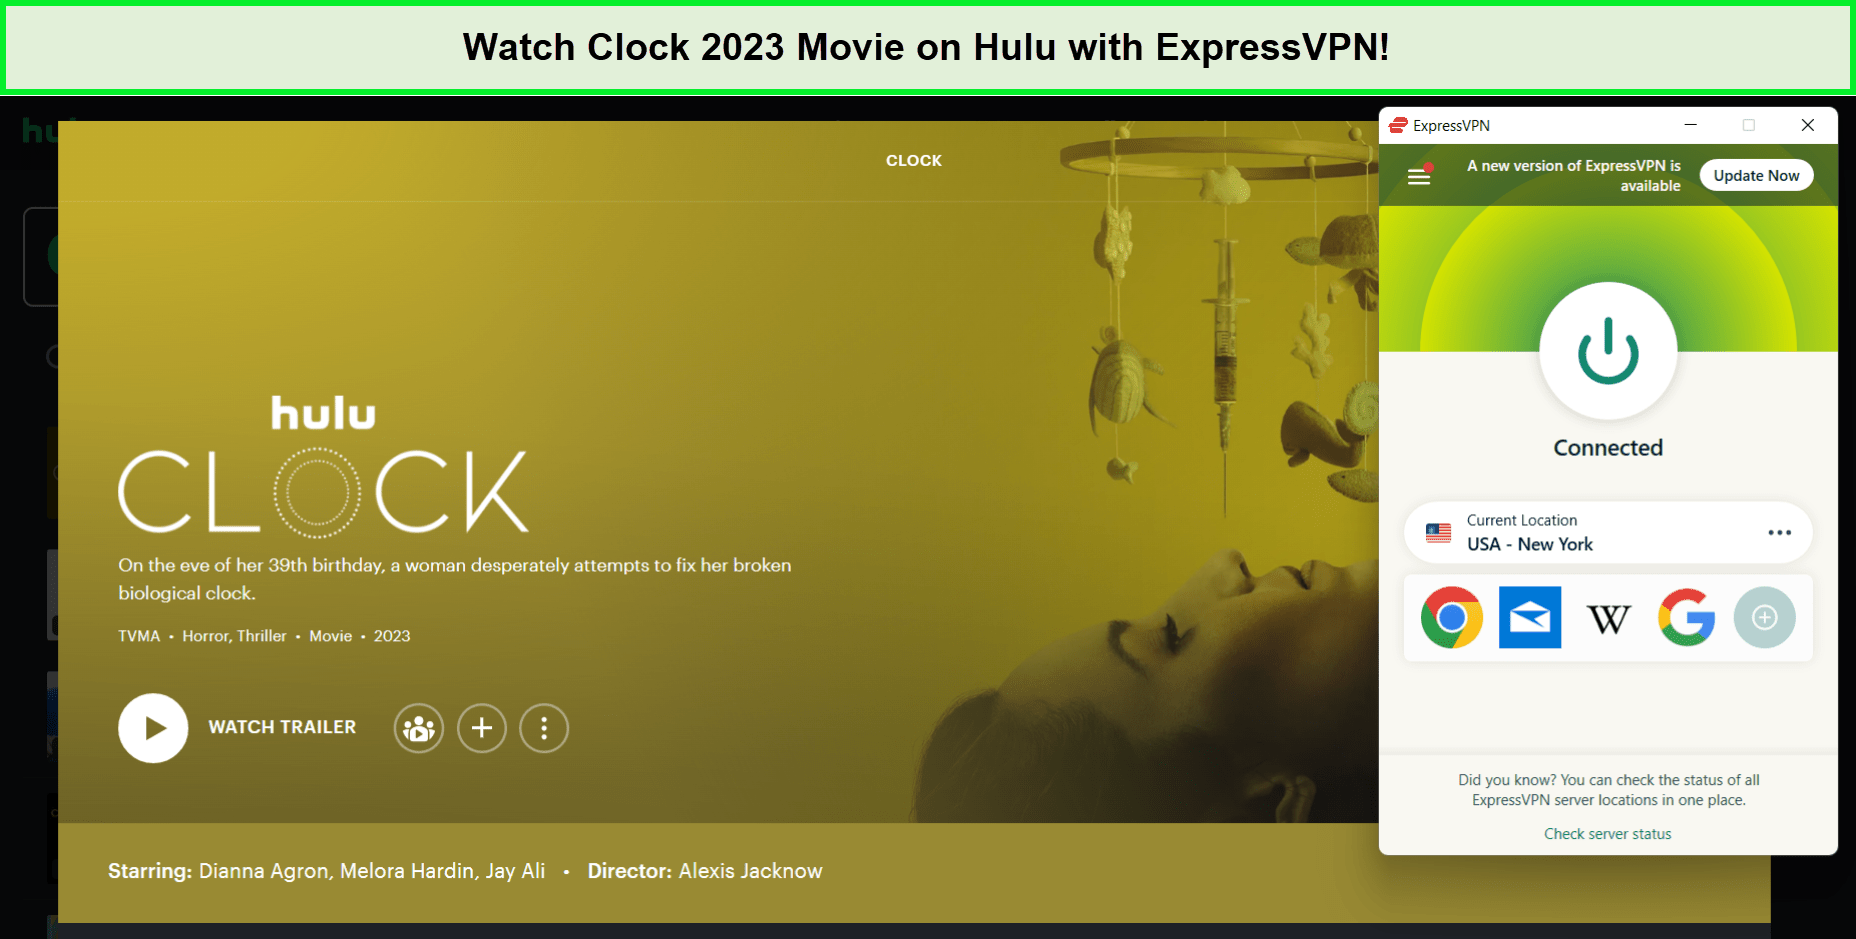 With-ExpressVPN-Watch-Clock-2023-Movie-on-Hulu-in-UAE